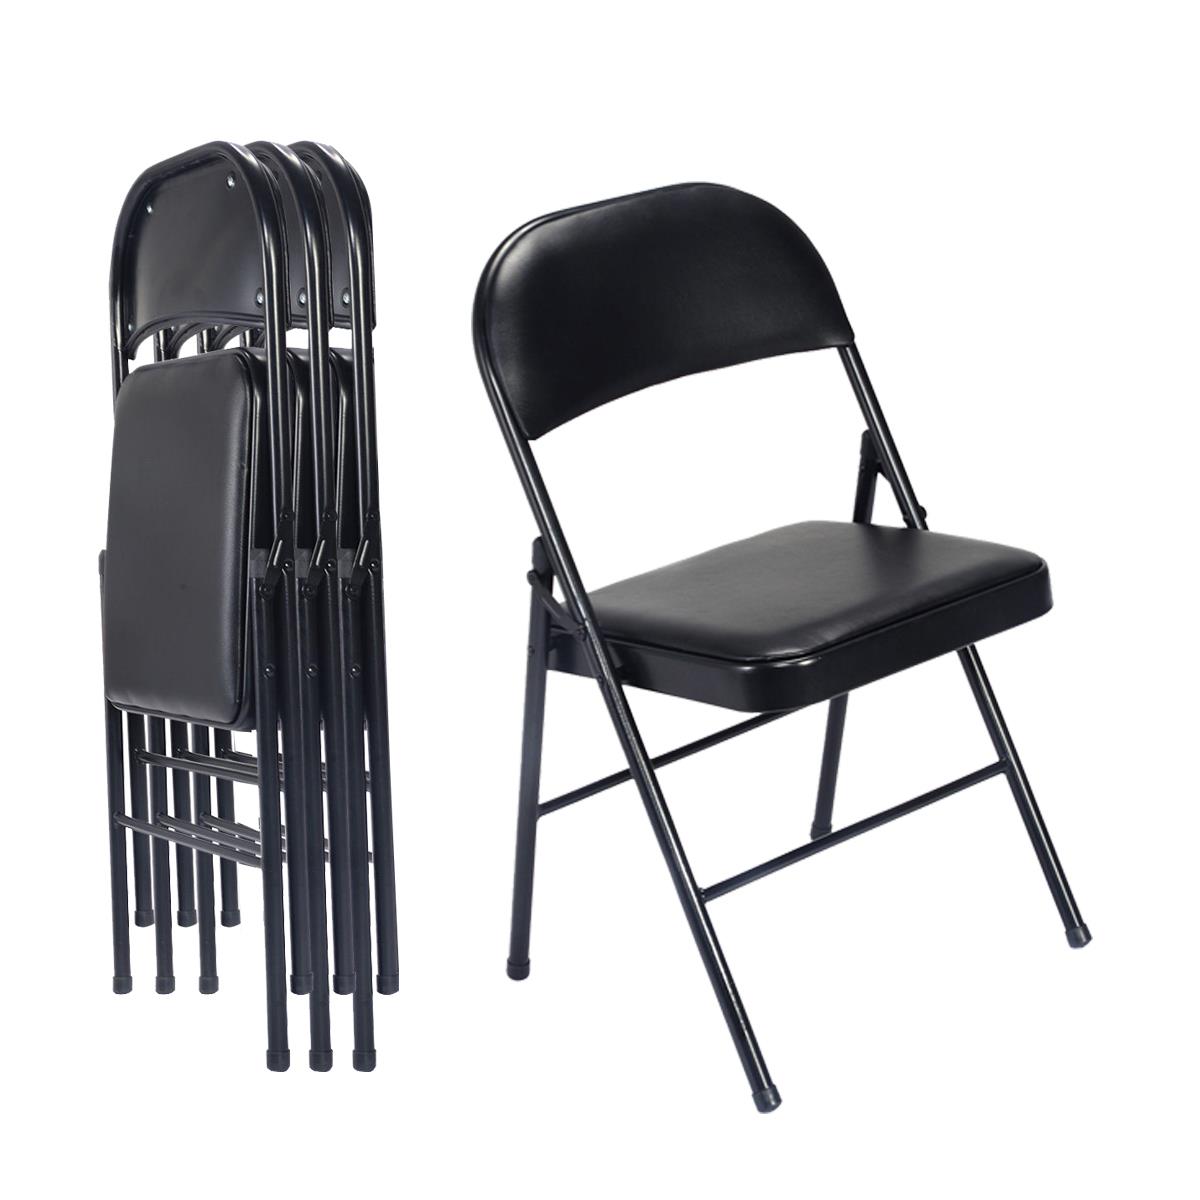 UbesGoo Set of 4 Fabric Upholstered Padded Seat Metal Frame Folding Chair Portable Black - image 3 of 8